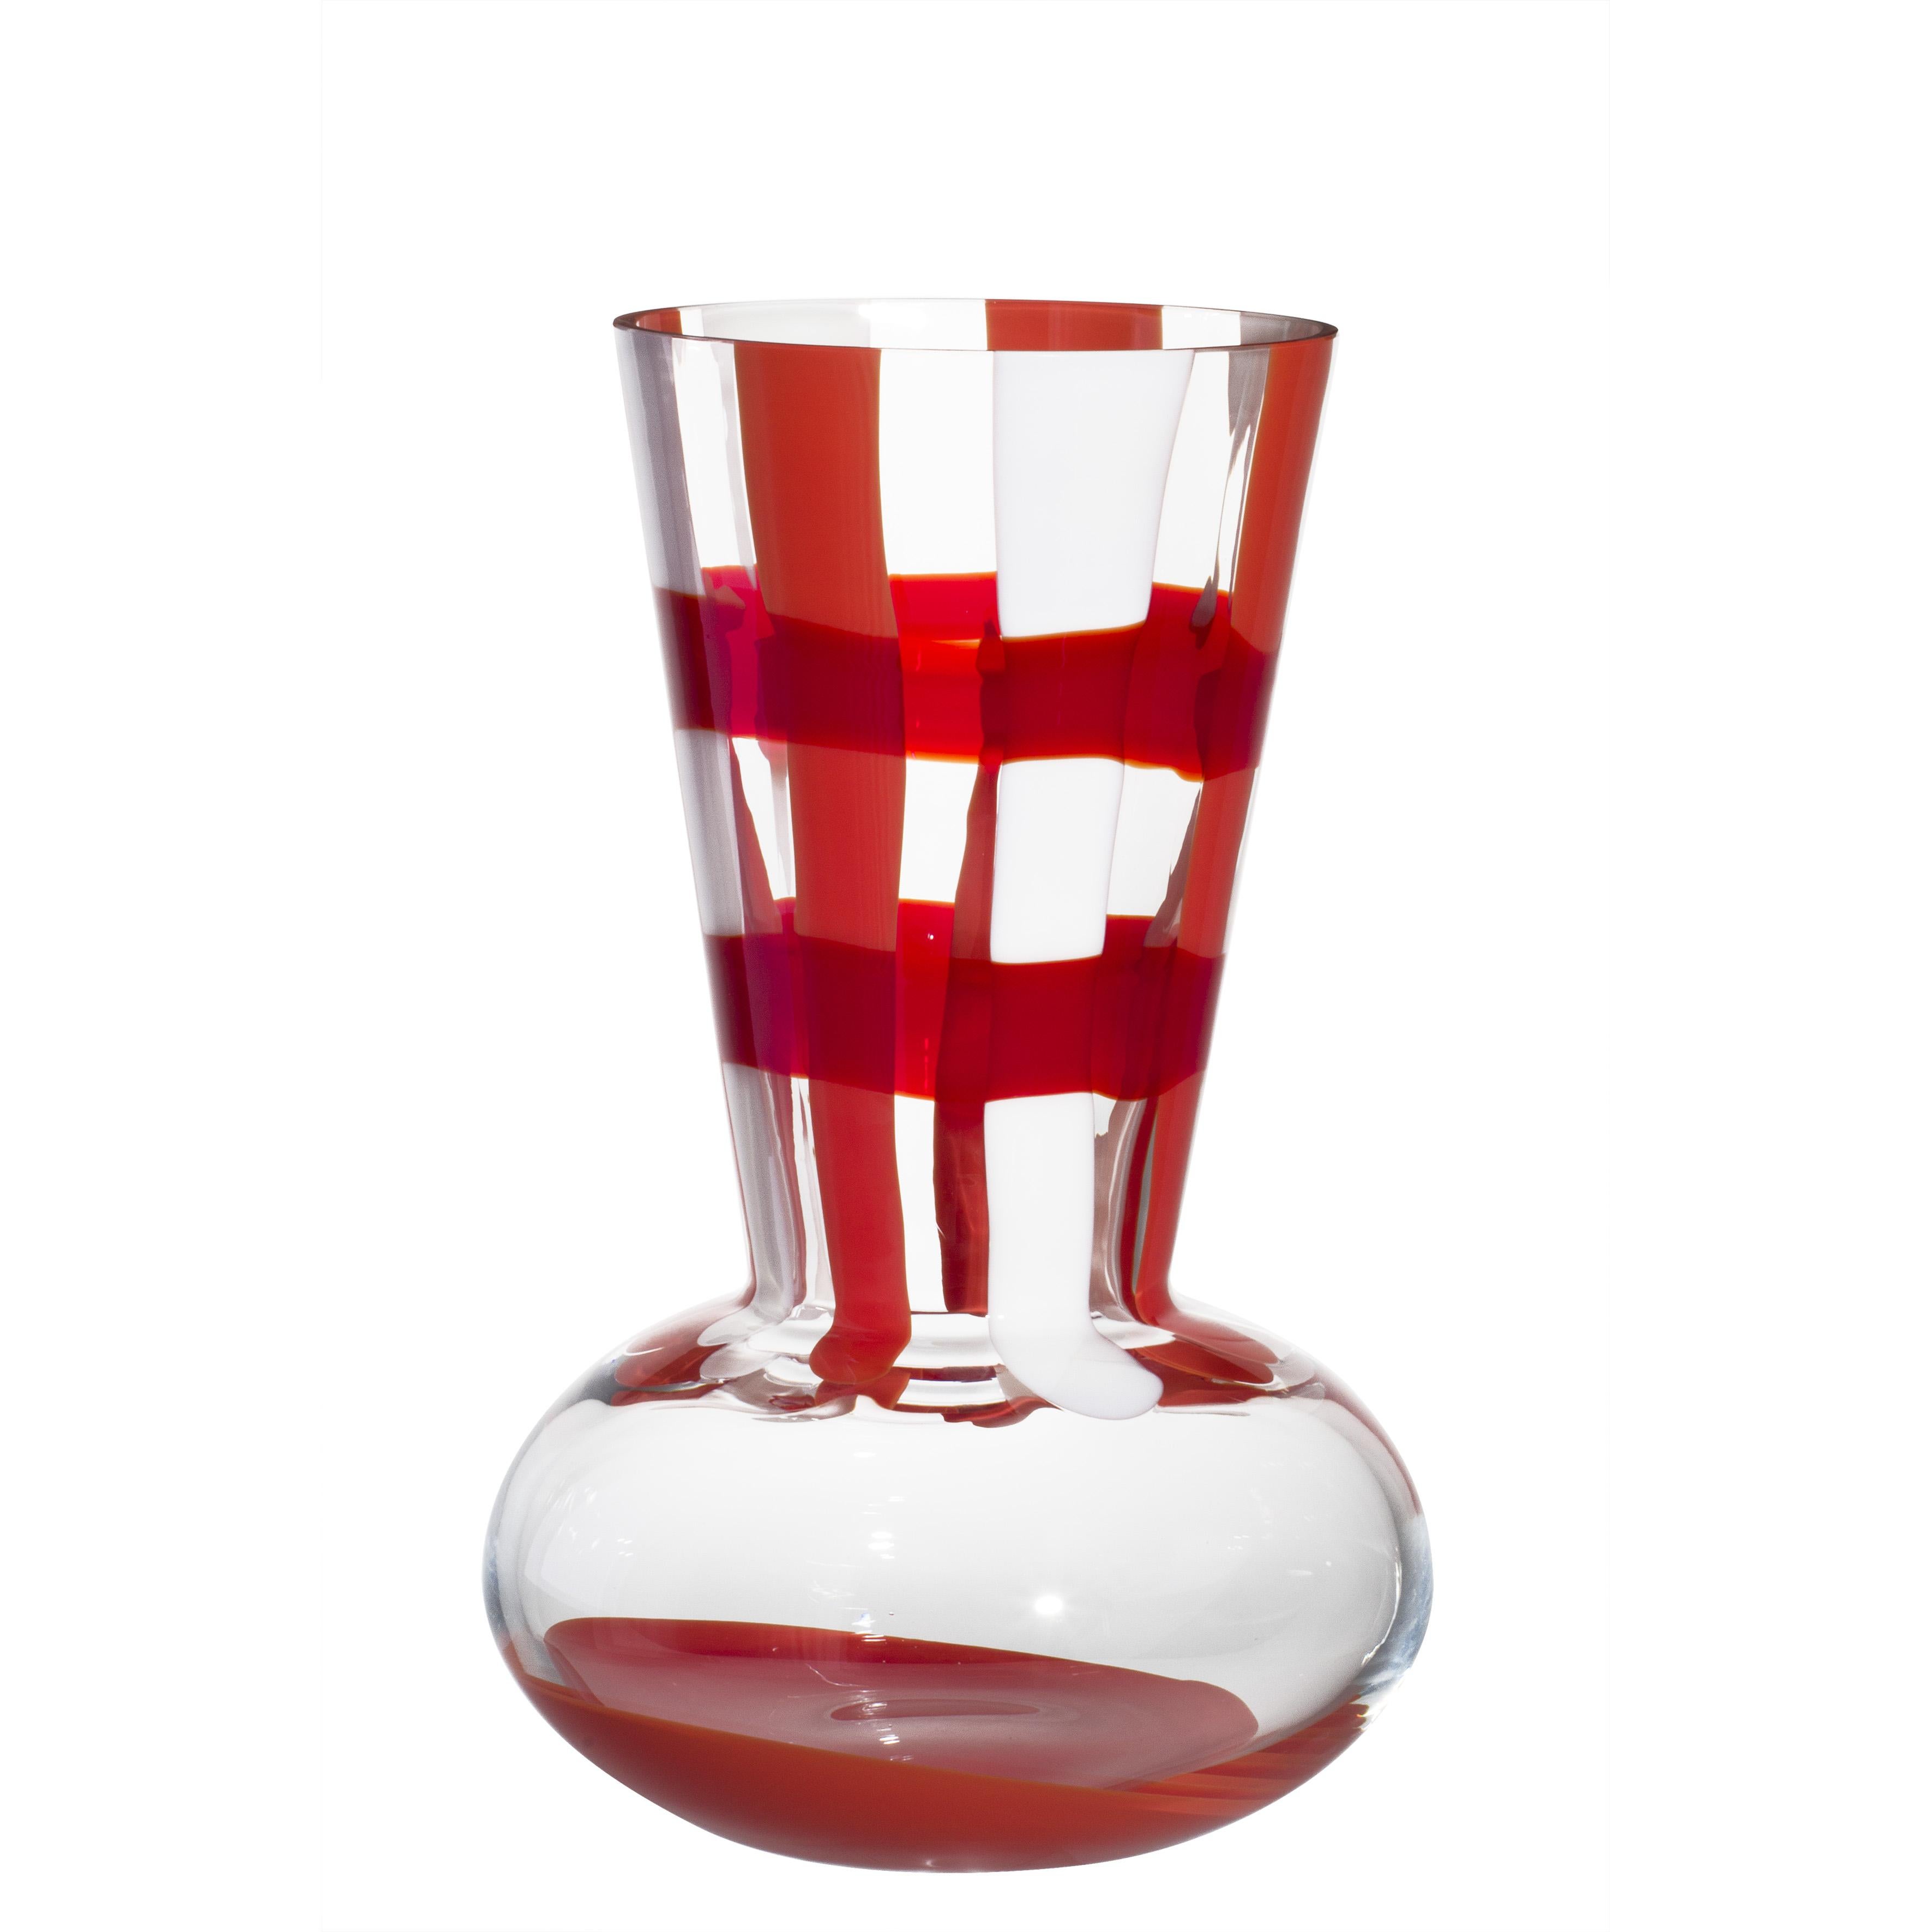 Medium Troncosfera Vase in Orange, Ivory and Red by Carlo Moretti